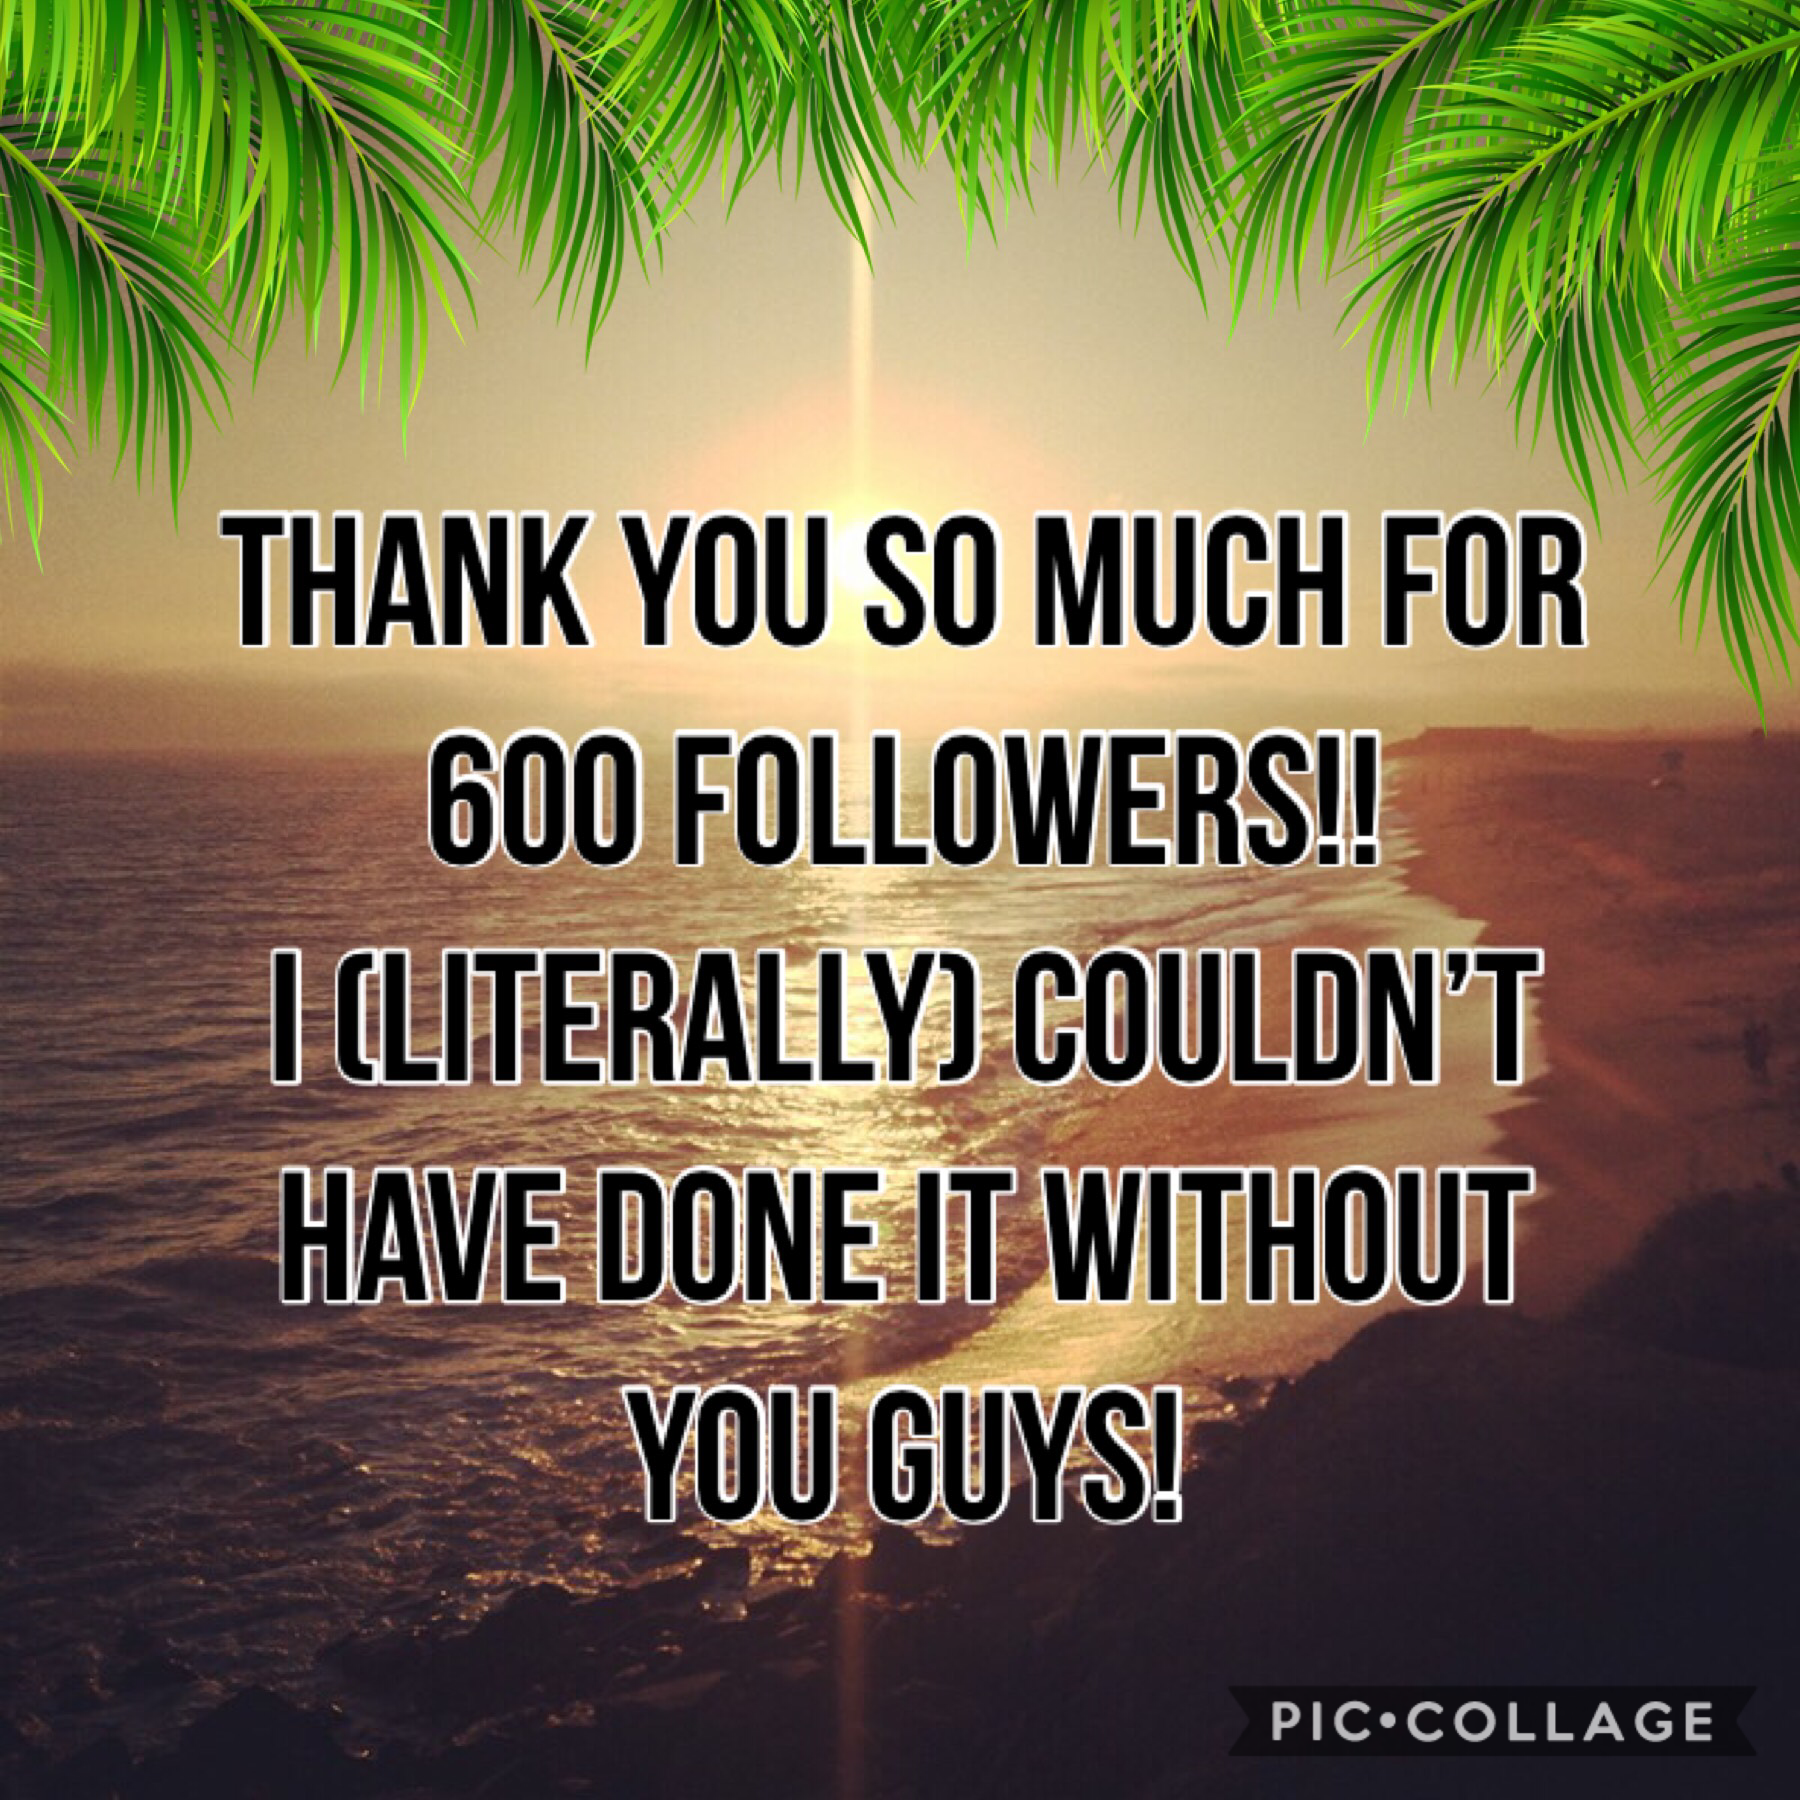 I appreciate it so much!!! Love all 600 of you😊